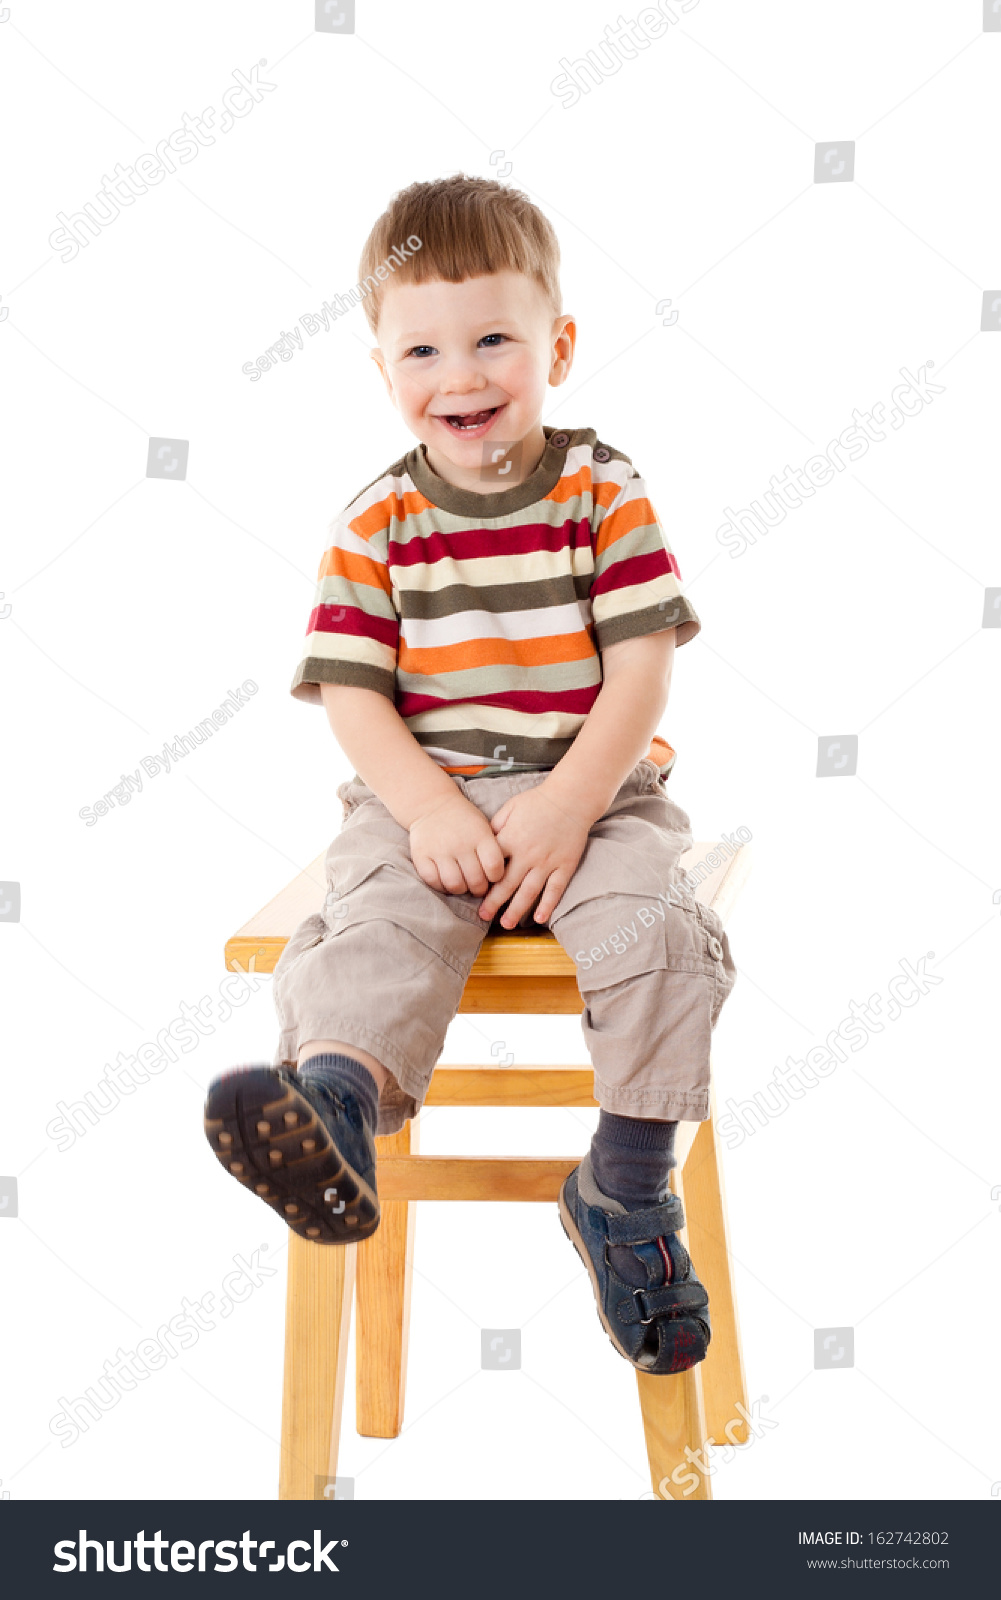 Smiling Little Boy Sitting On Stool Stock Photo 162742802 | Shutterstock